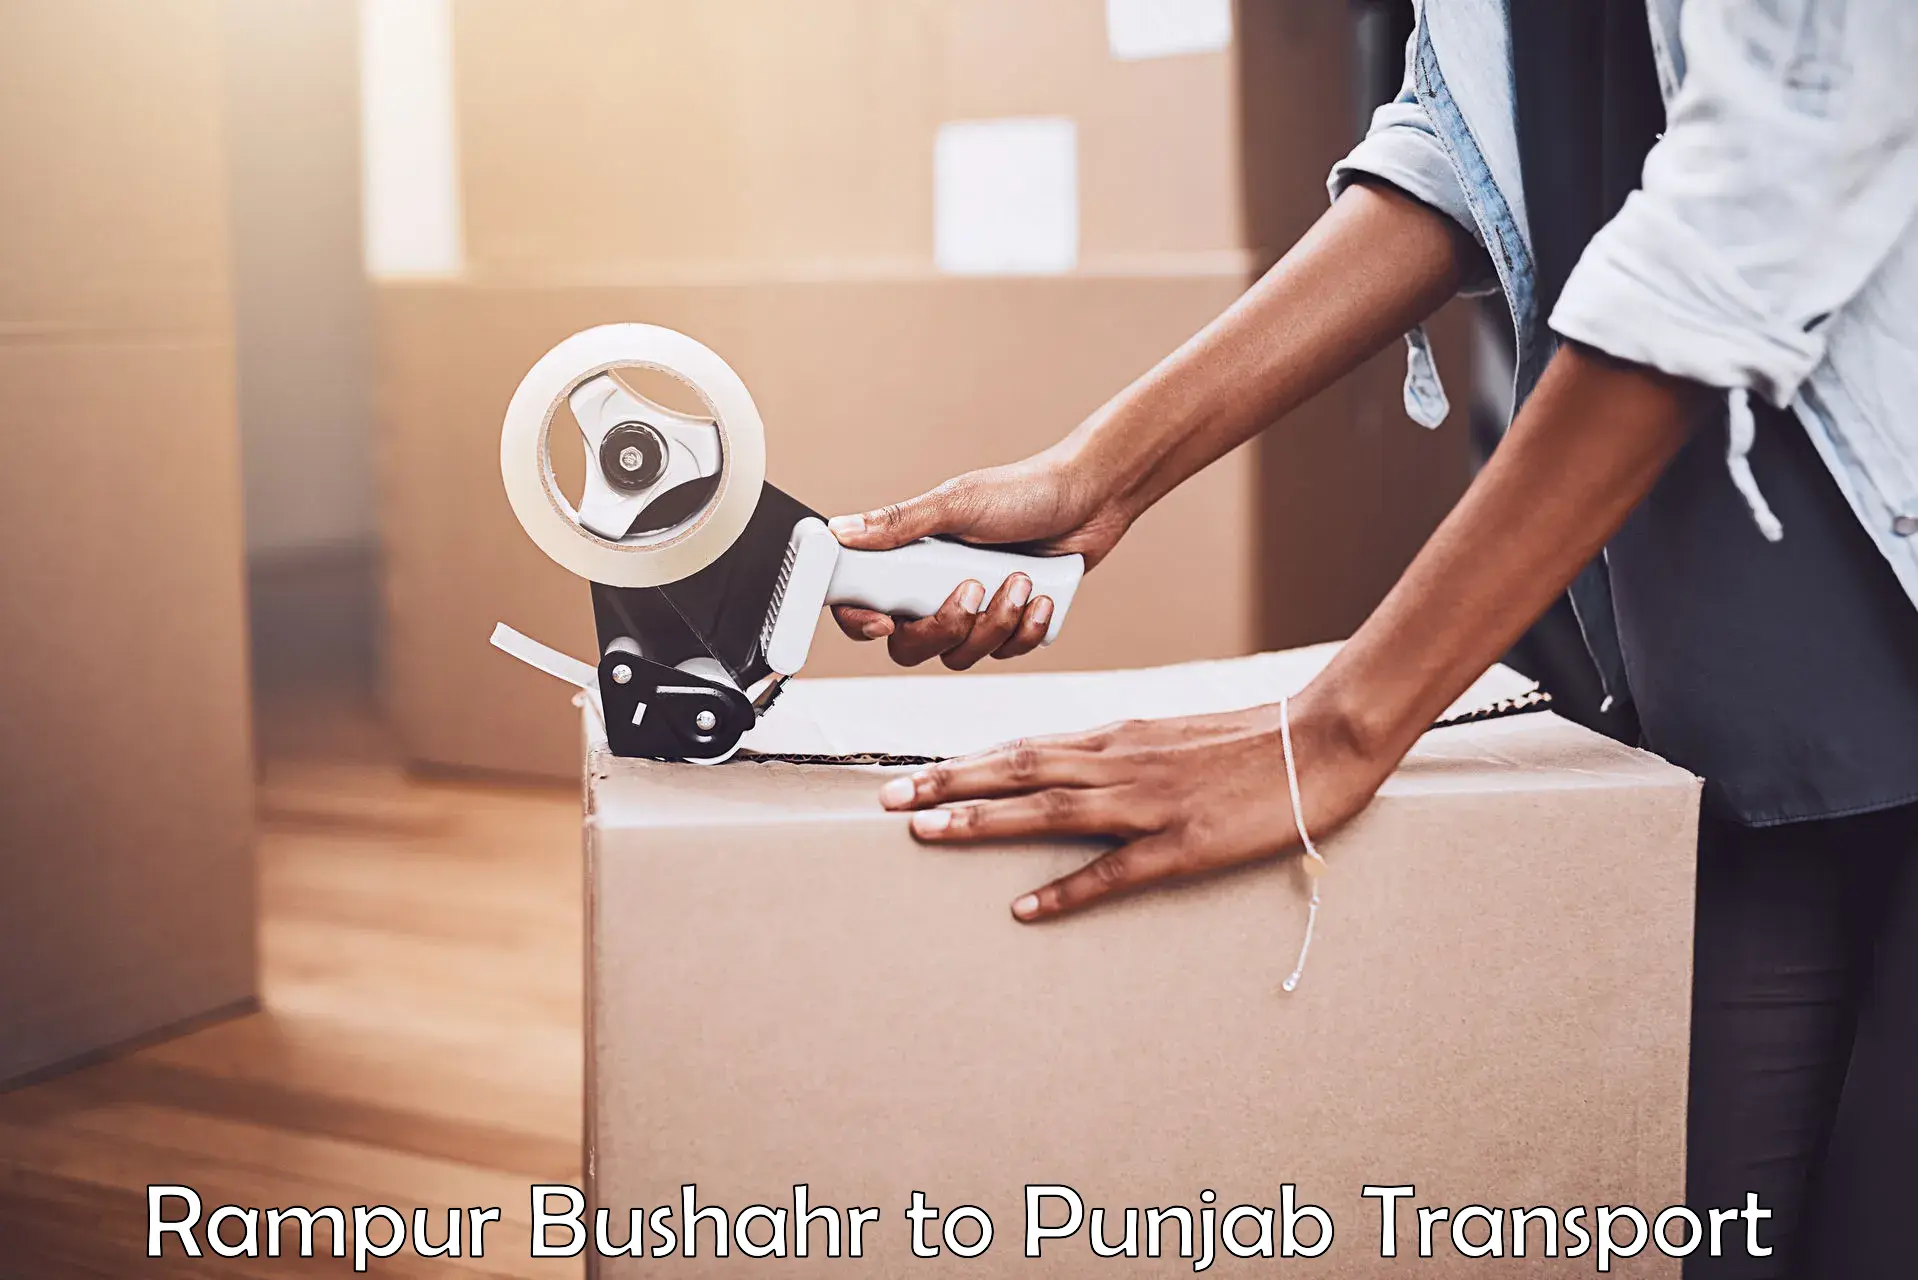 Goods delivery service Rampur Bushahr to Kapurthala